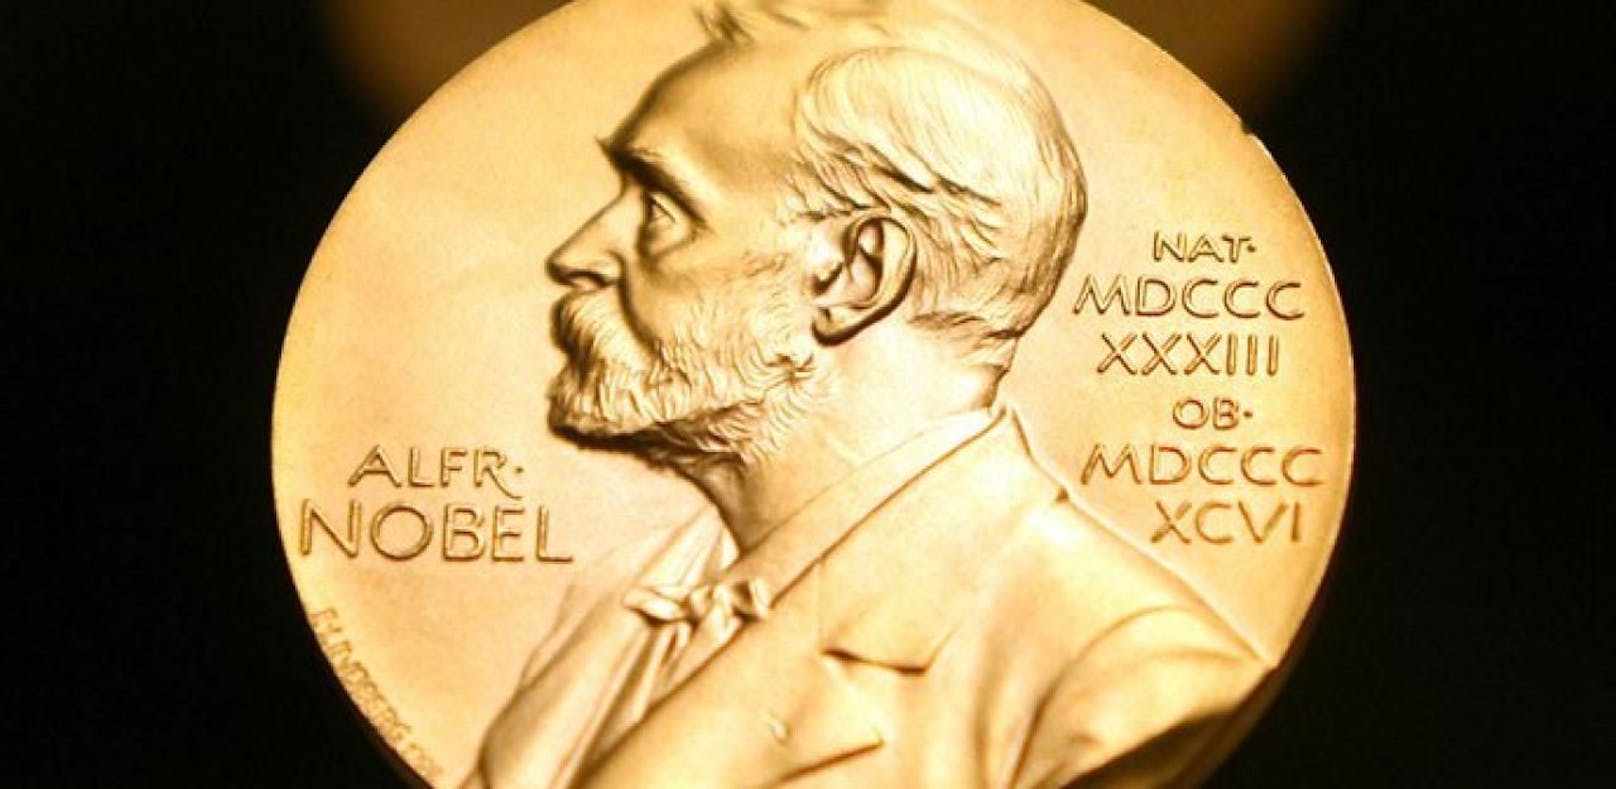 Friedensnobelpreis geht an Wiener Anti-Atom-Aktion